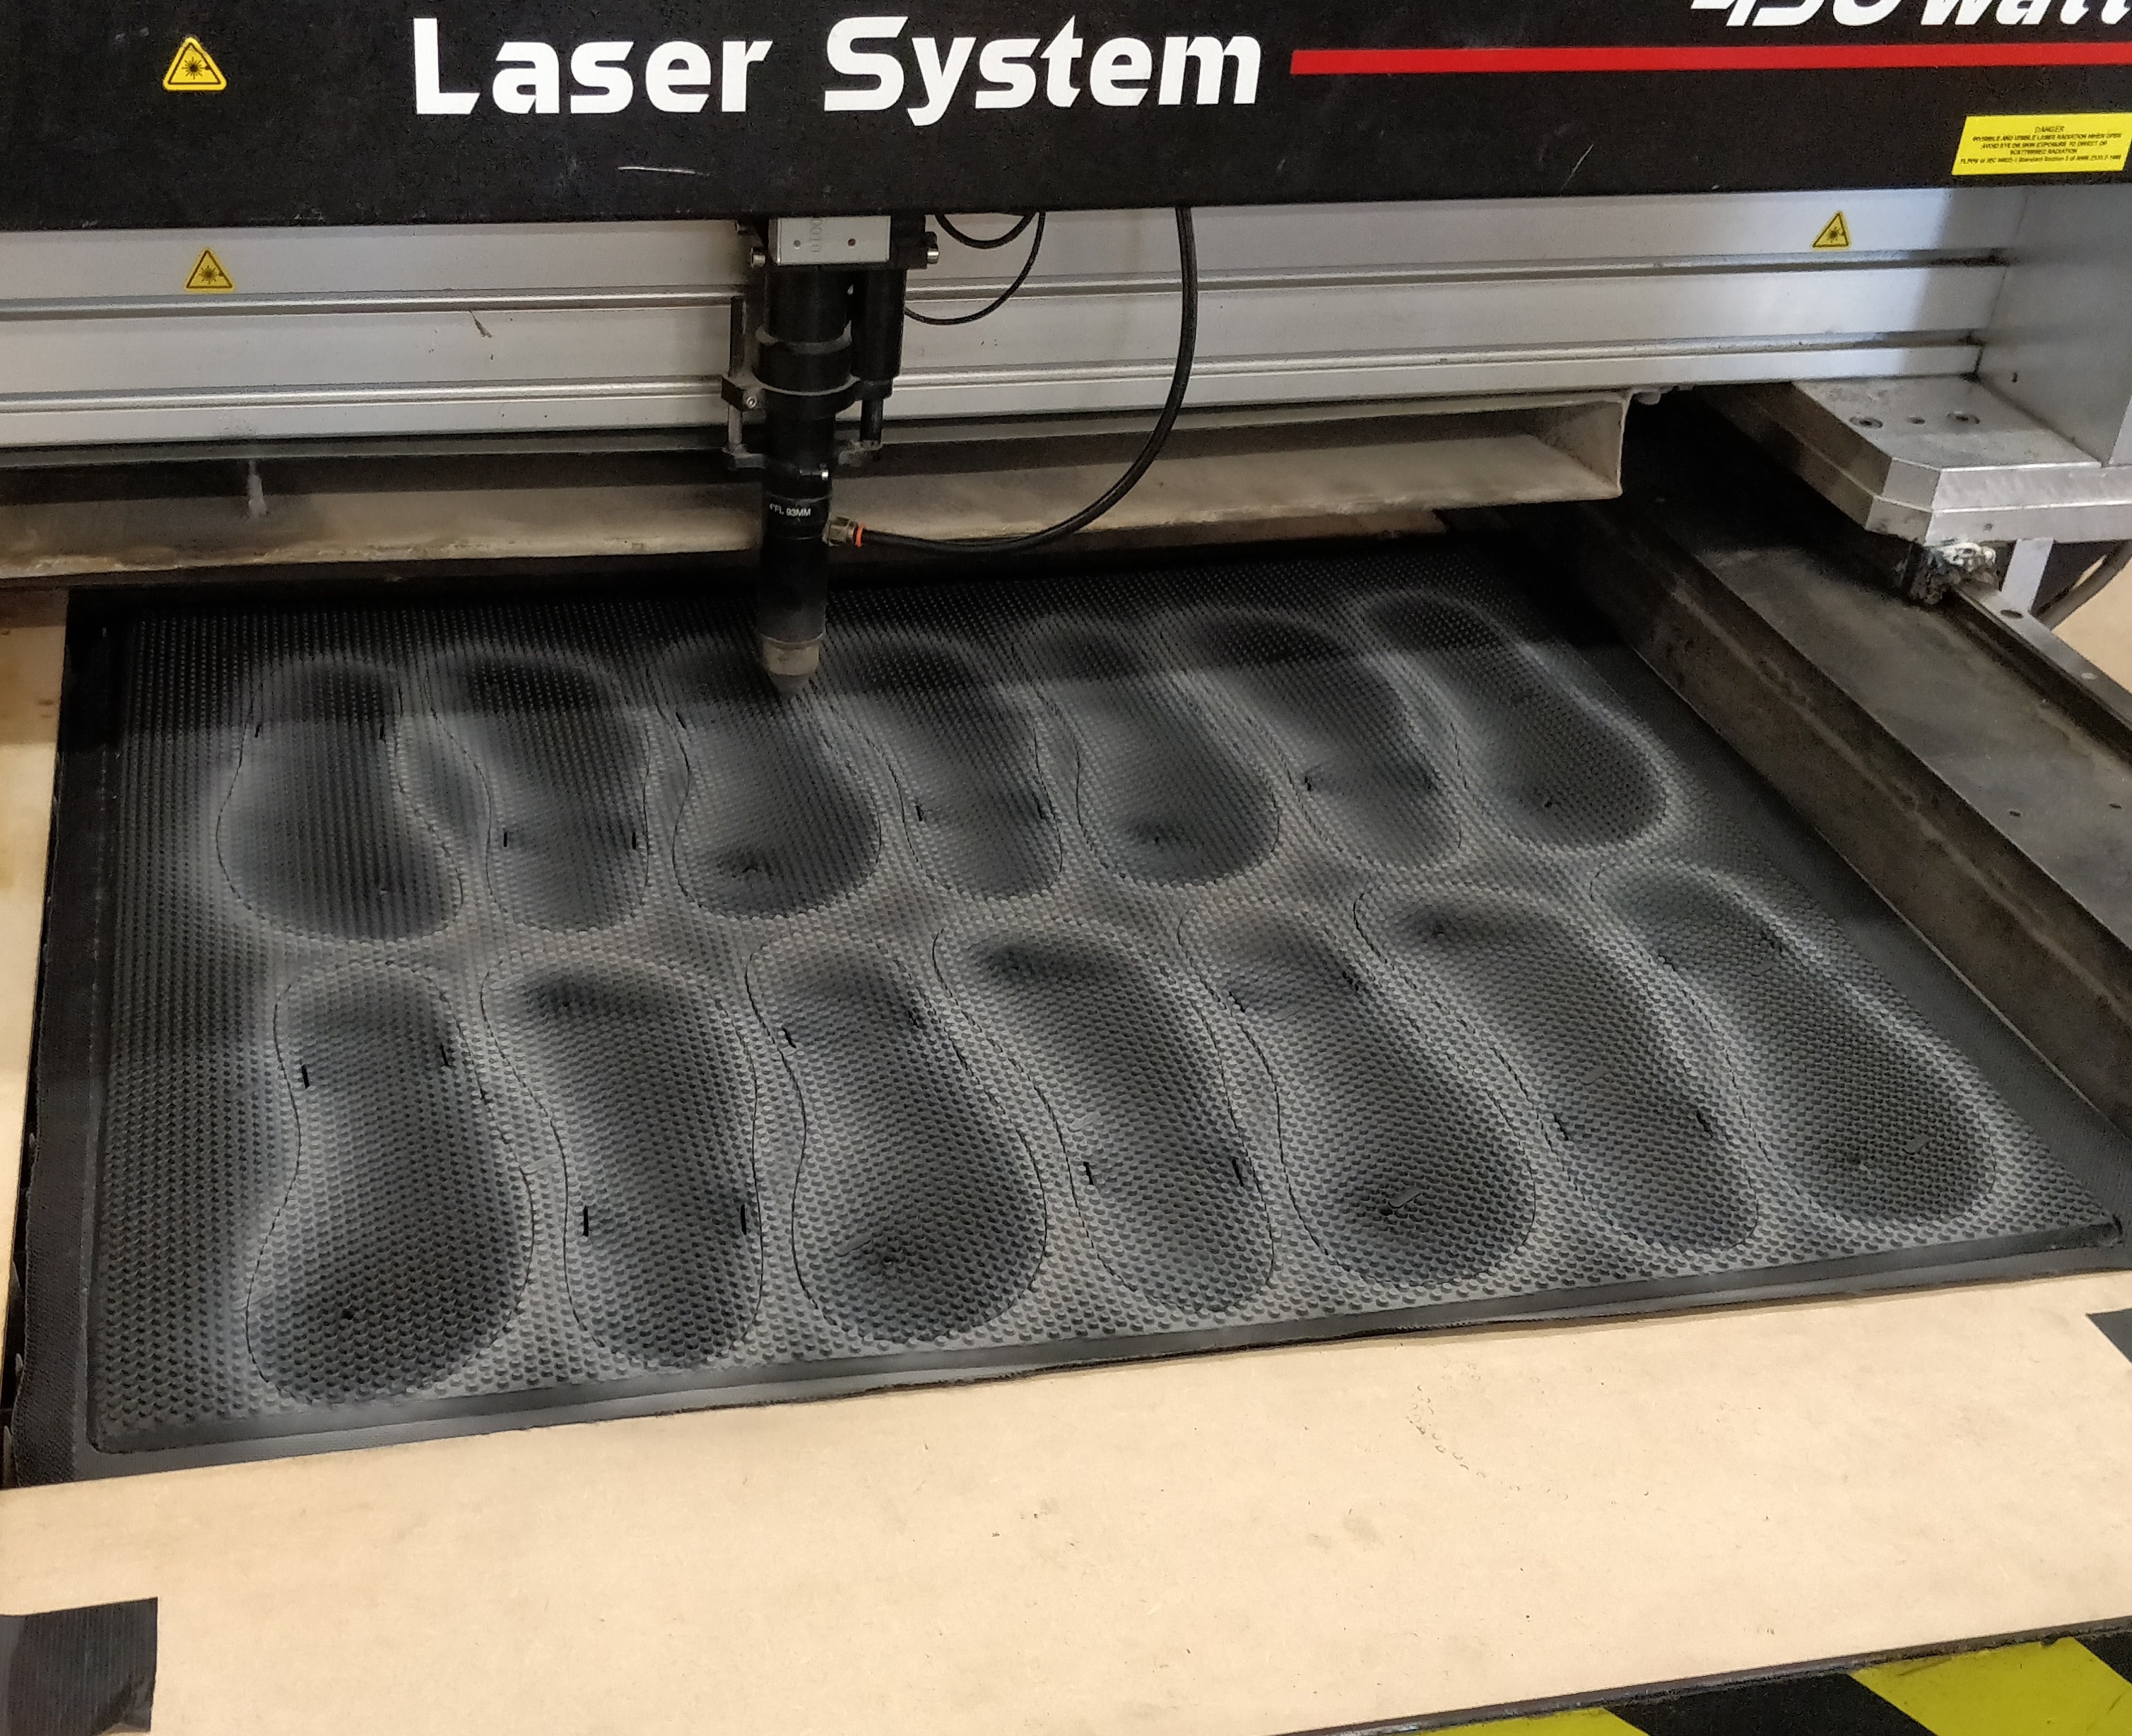 Laser cutting rubber sandals 